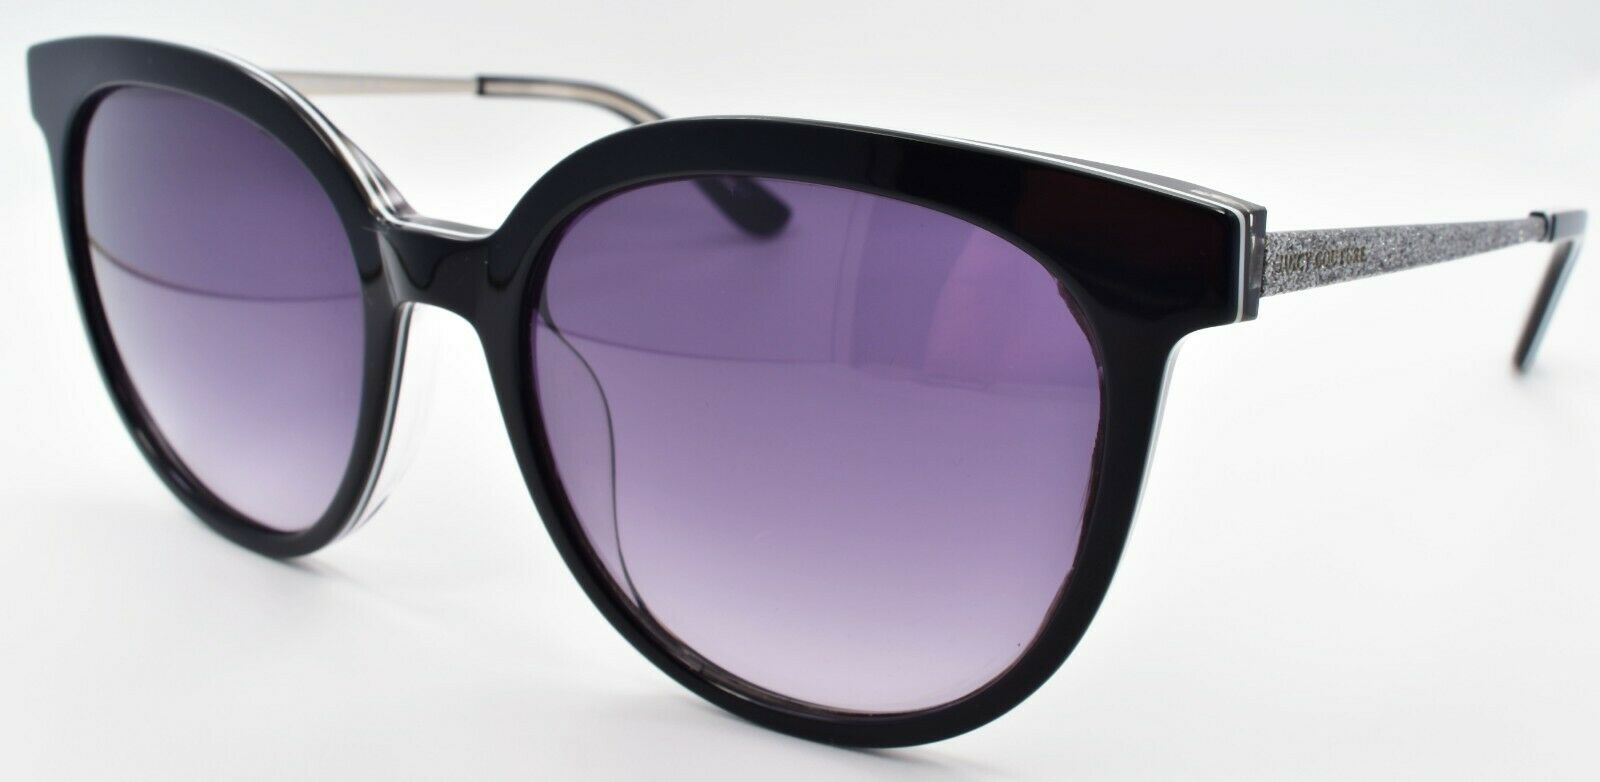 1-Juicy Couture JU610/G/S 8079O Women's Sunglasses Black / Gray Gradient-716736196992-IKSpecs